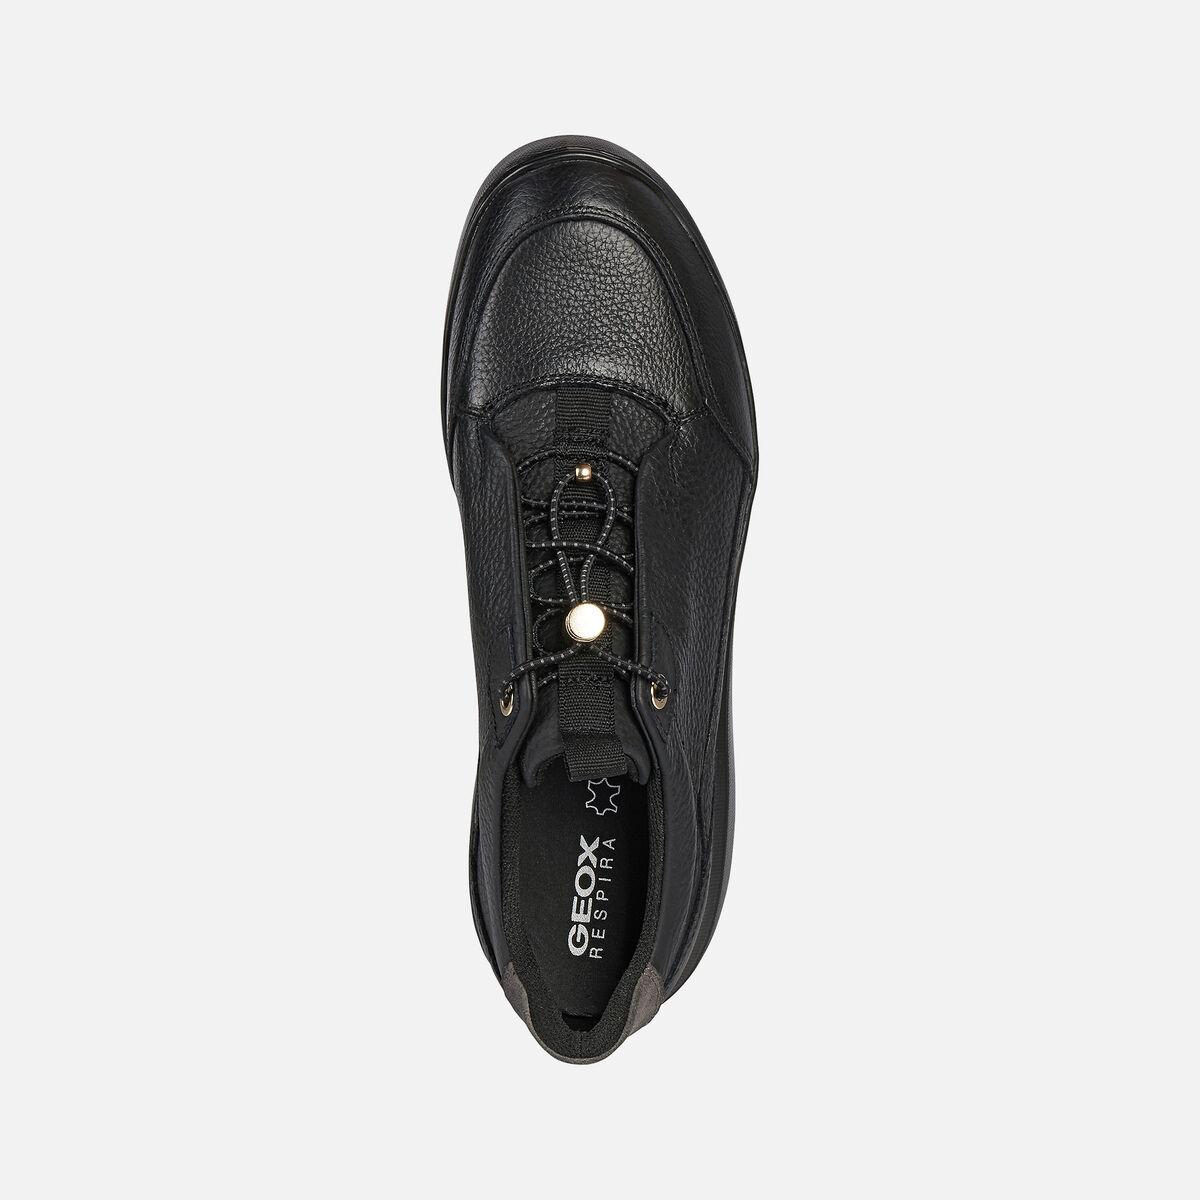 Giày Sneakers Nữ GEOX D Rubidia B - BLACK/DK GREY